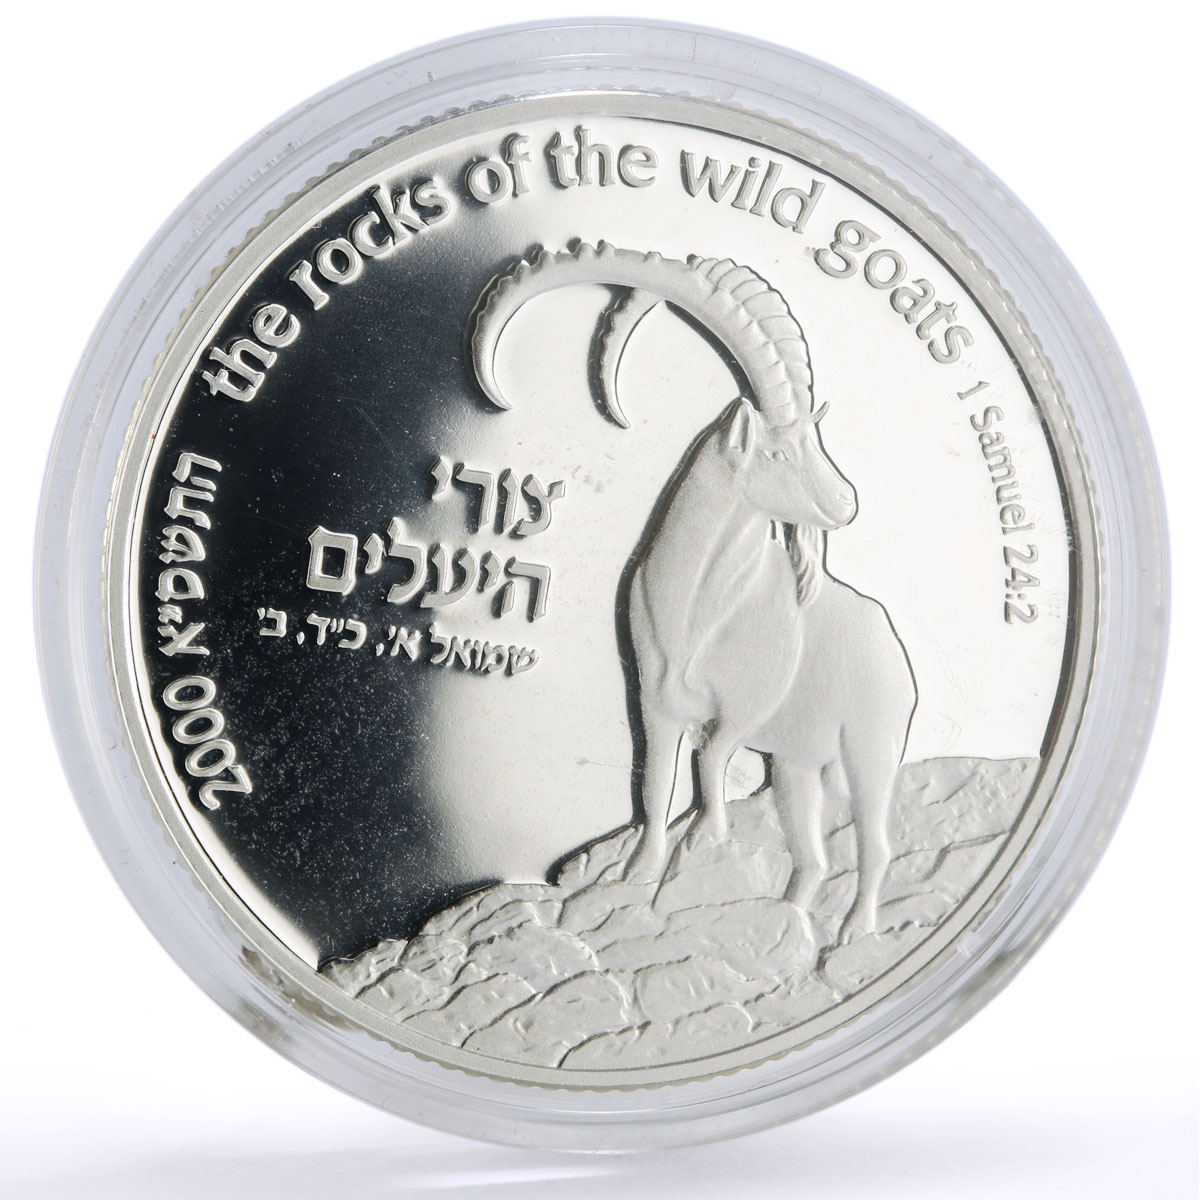 Israel 2 sheqalim Biblical Wildlife Wild Goat Shittah Tree silver coin 2001